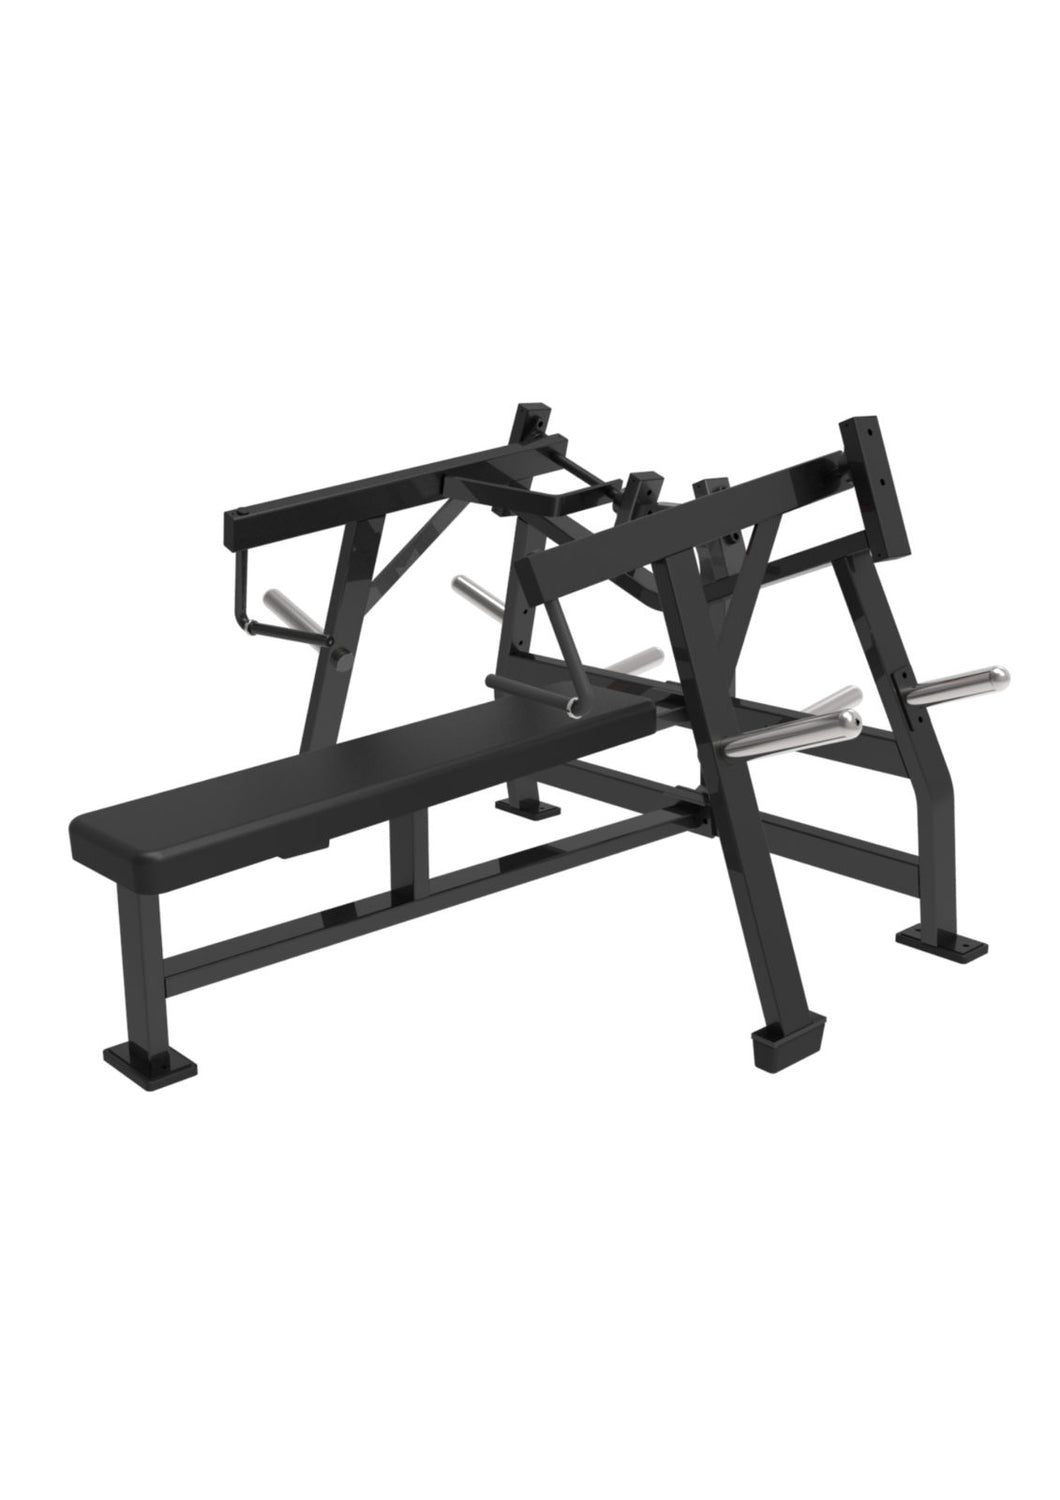 Horizontal chest/bench press